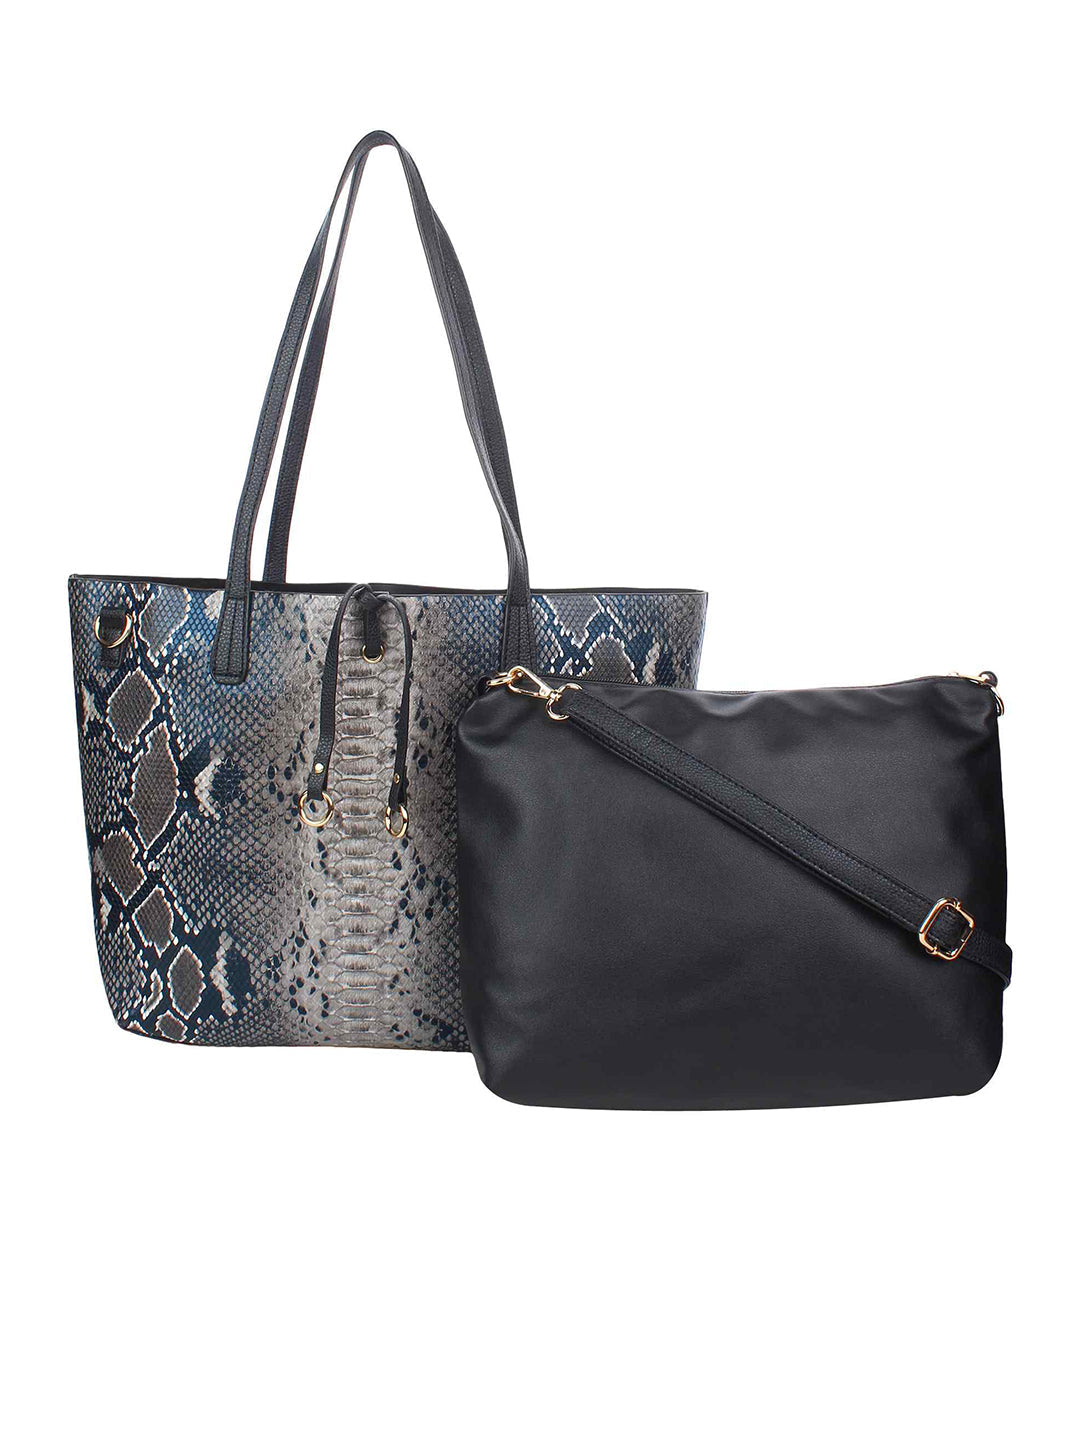 Women Handbags, Handbags, Black Tote Bag